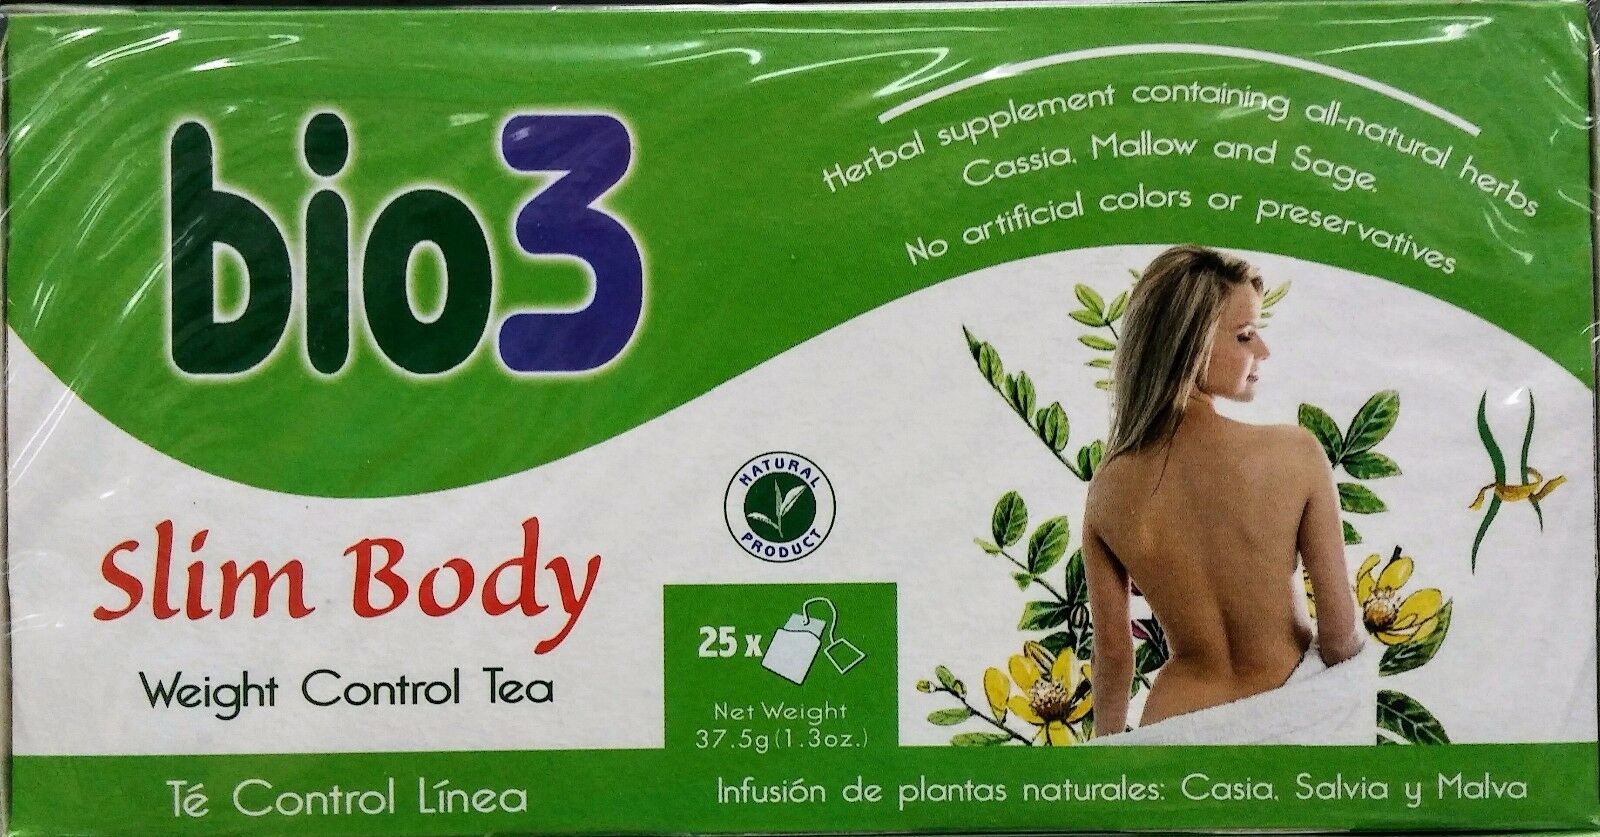 Bio3 Weight Control Tea,slimming Slim Body,weight Control Detox,1 Pack, 25 Bags